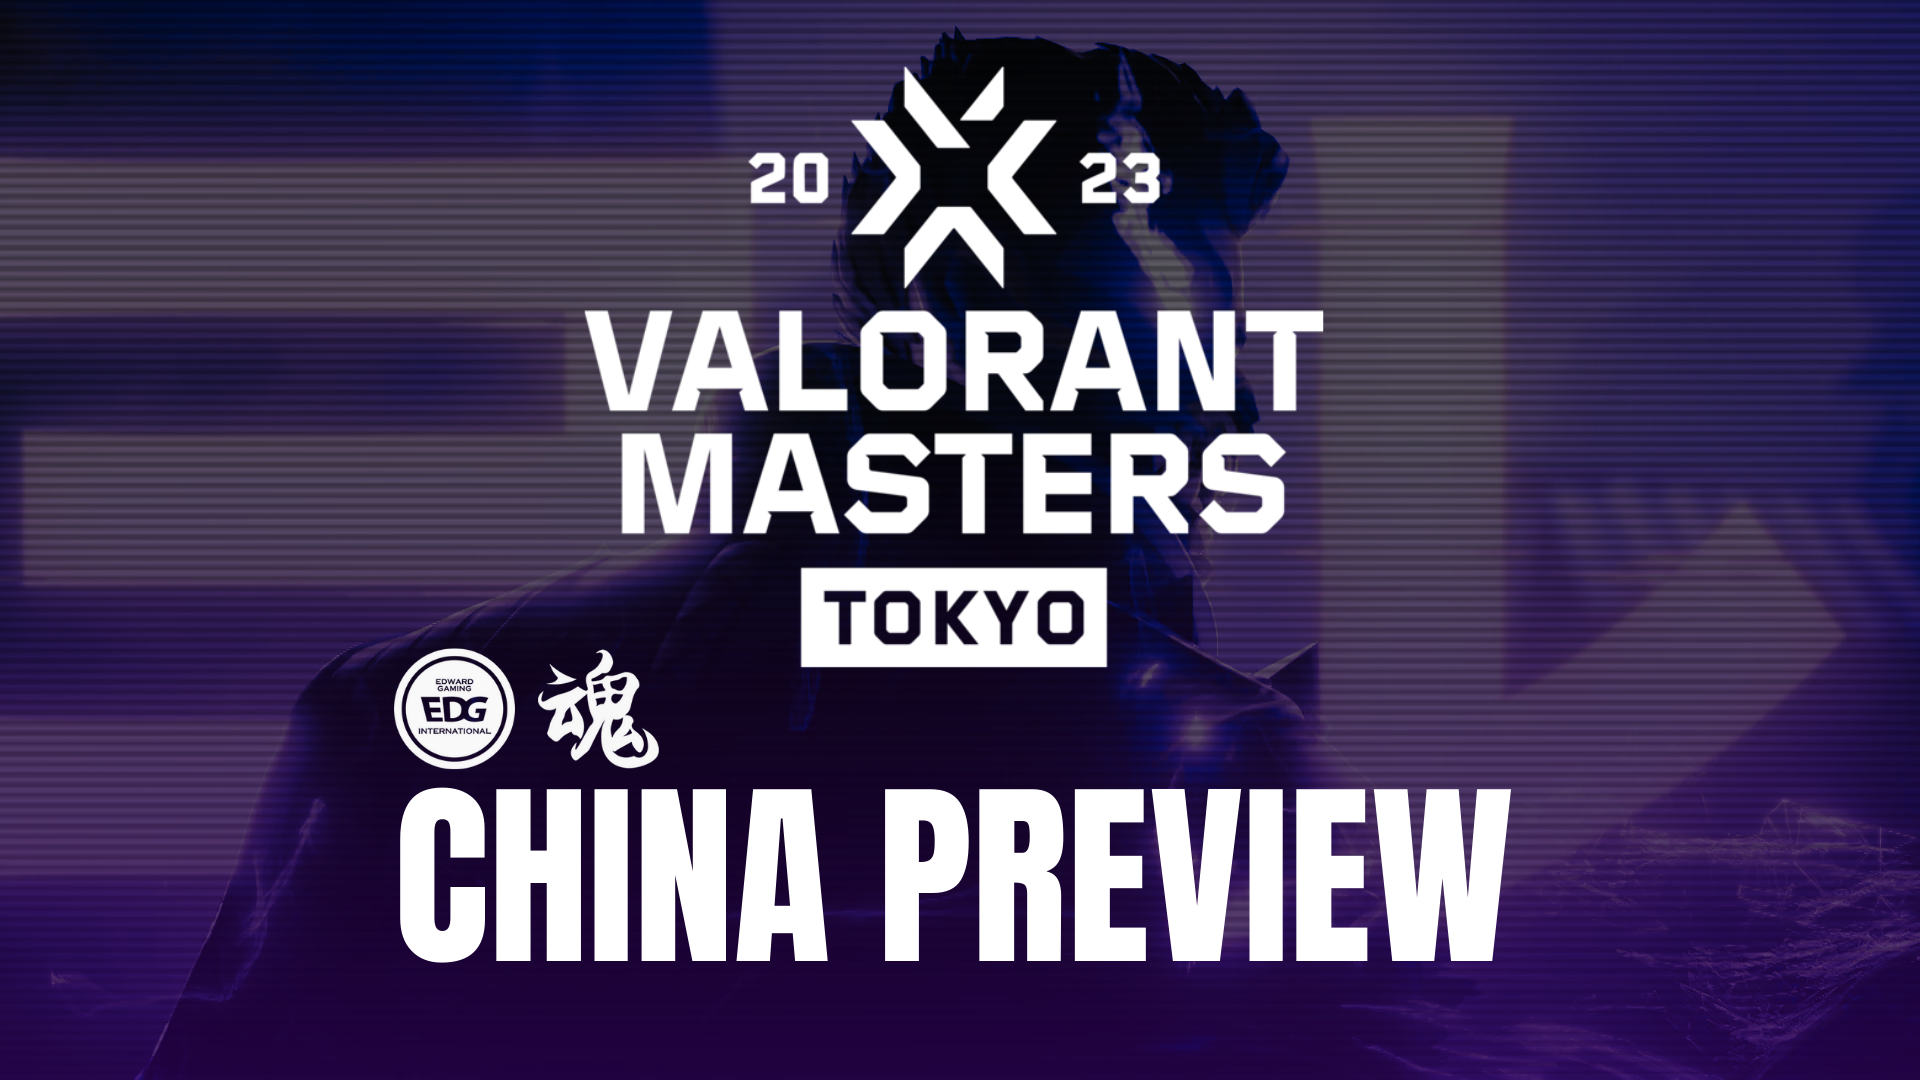 VCT Masters Tokyo: Valorant's Premier Championship Event